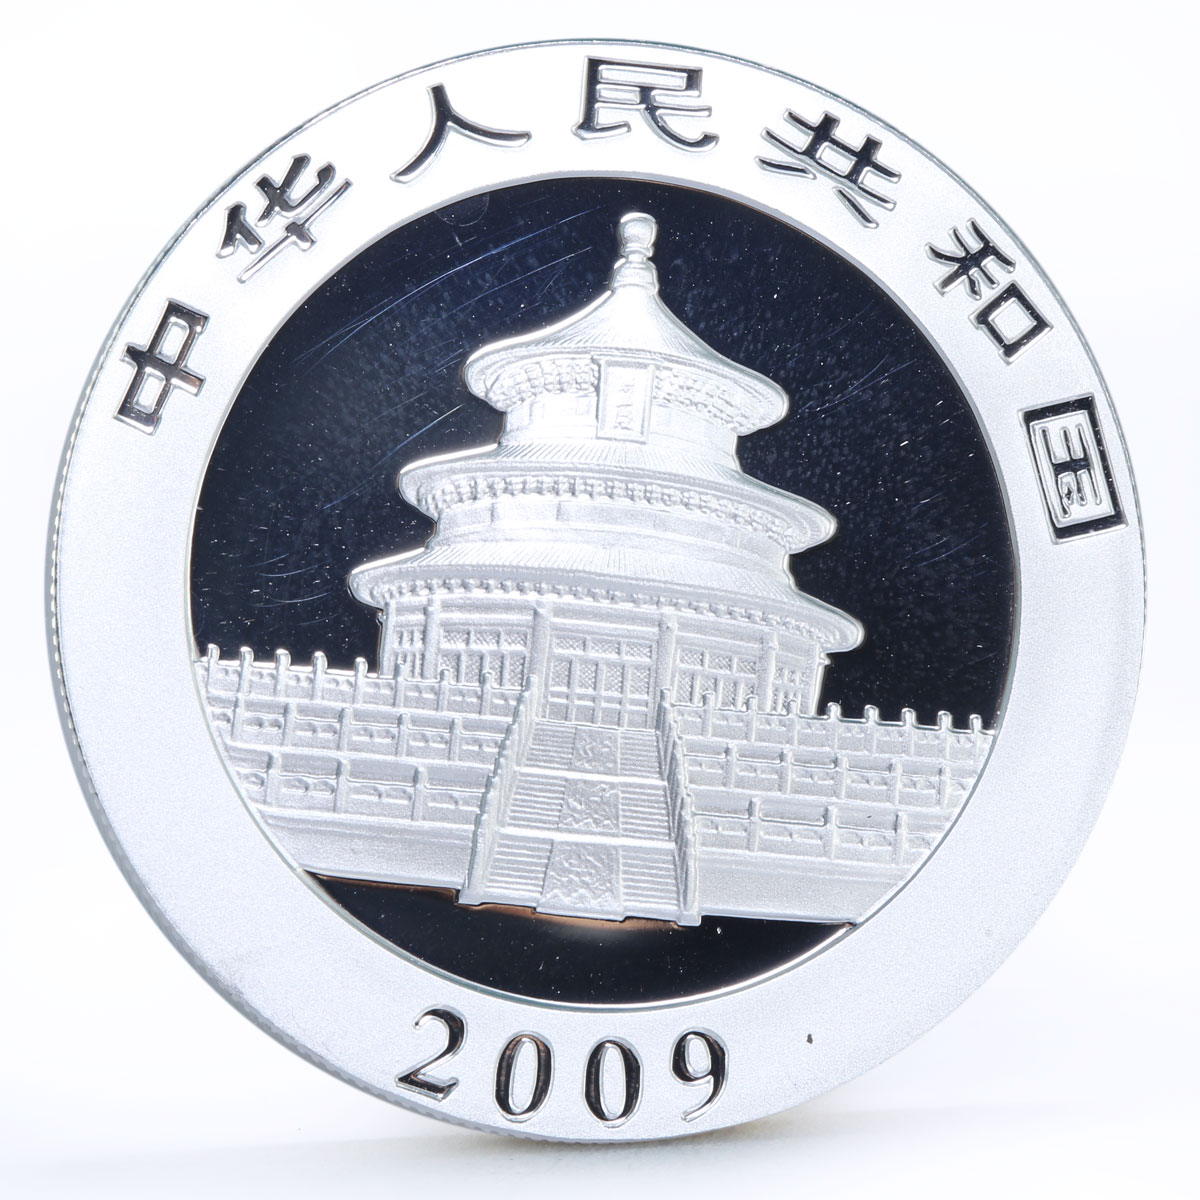 China 10 yuan World Wildlife Fund series Pandas gilded silver coin 2009